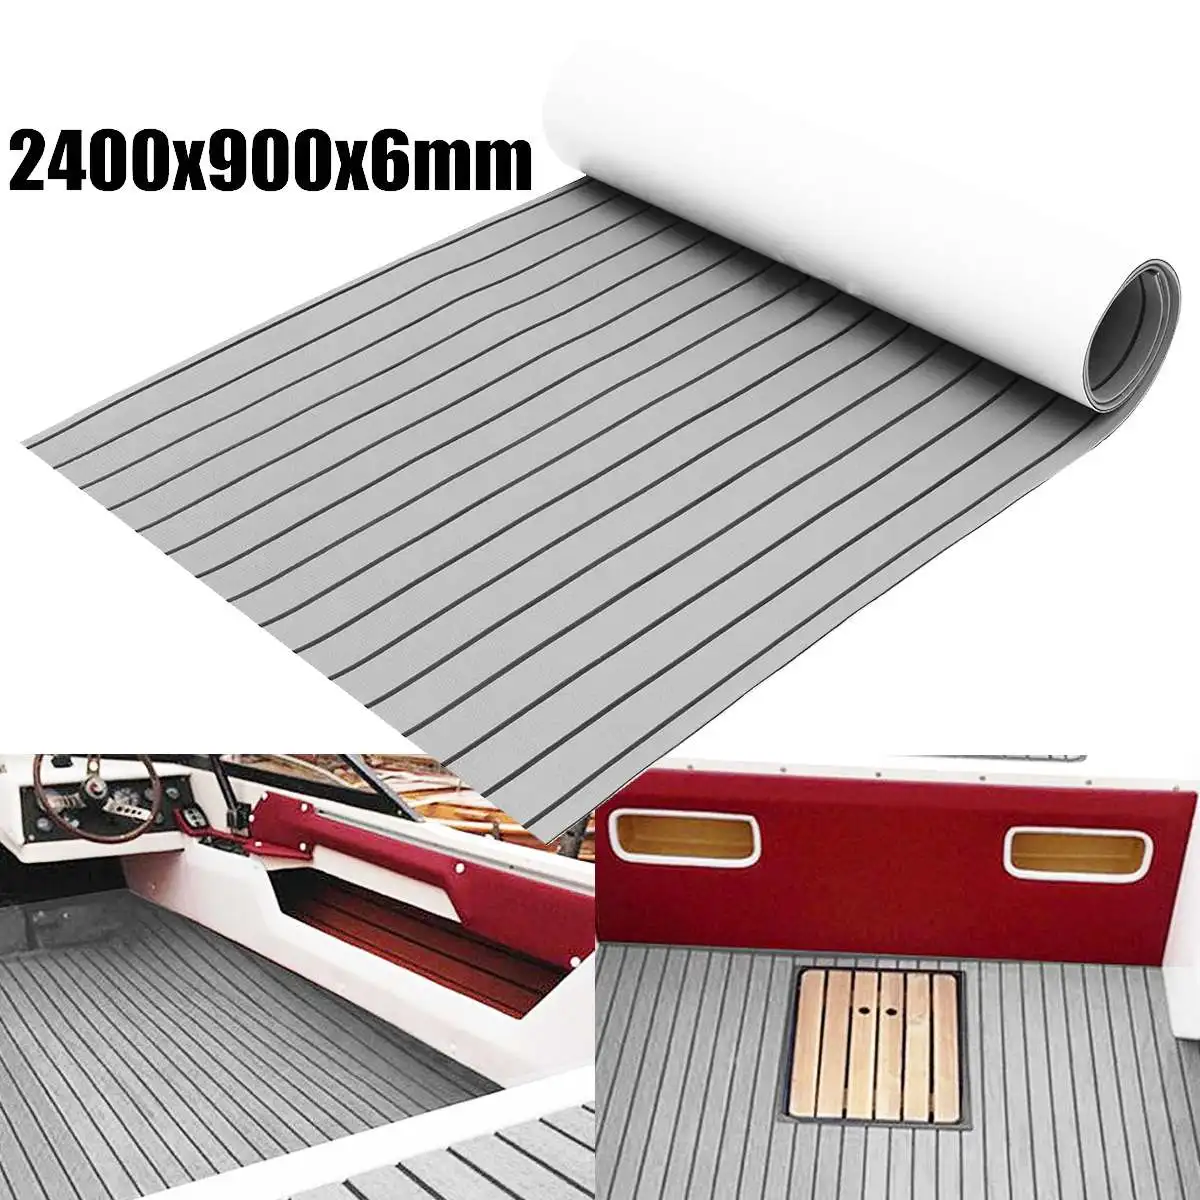 2400x900x6mm Self-Adhesive eva teak foam decking Sheet for boats Marine Flooring Carpet Yacht Flooring Pad Boat Mat Decorative